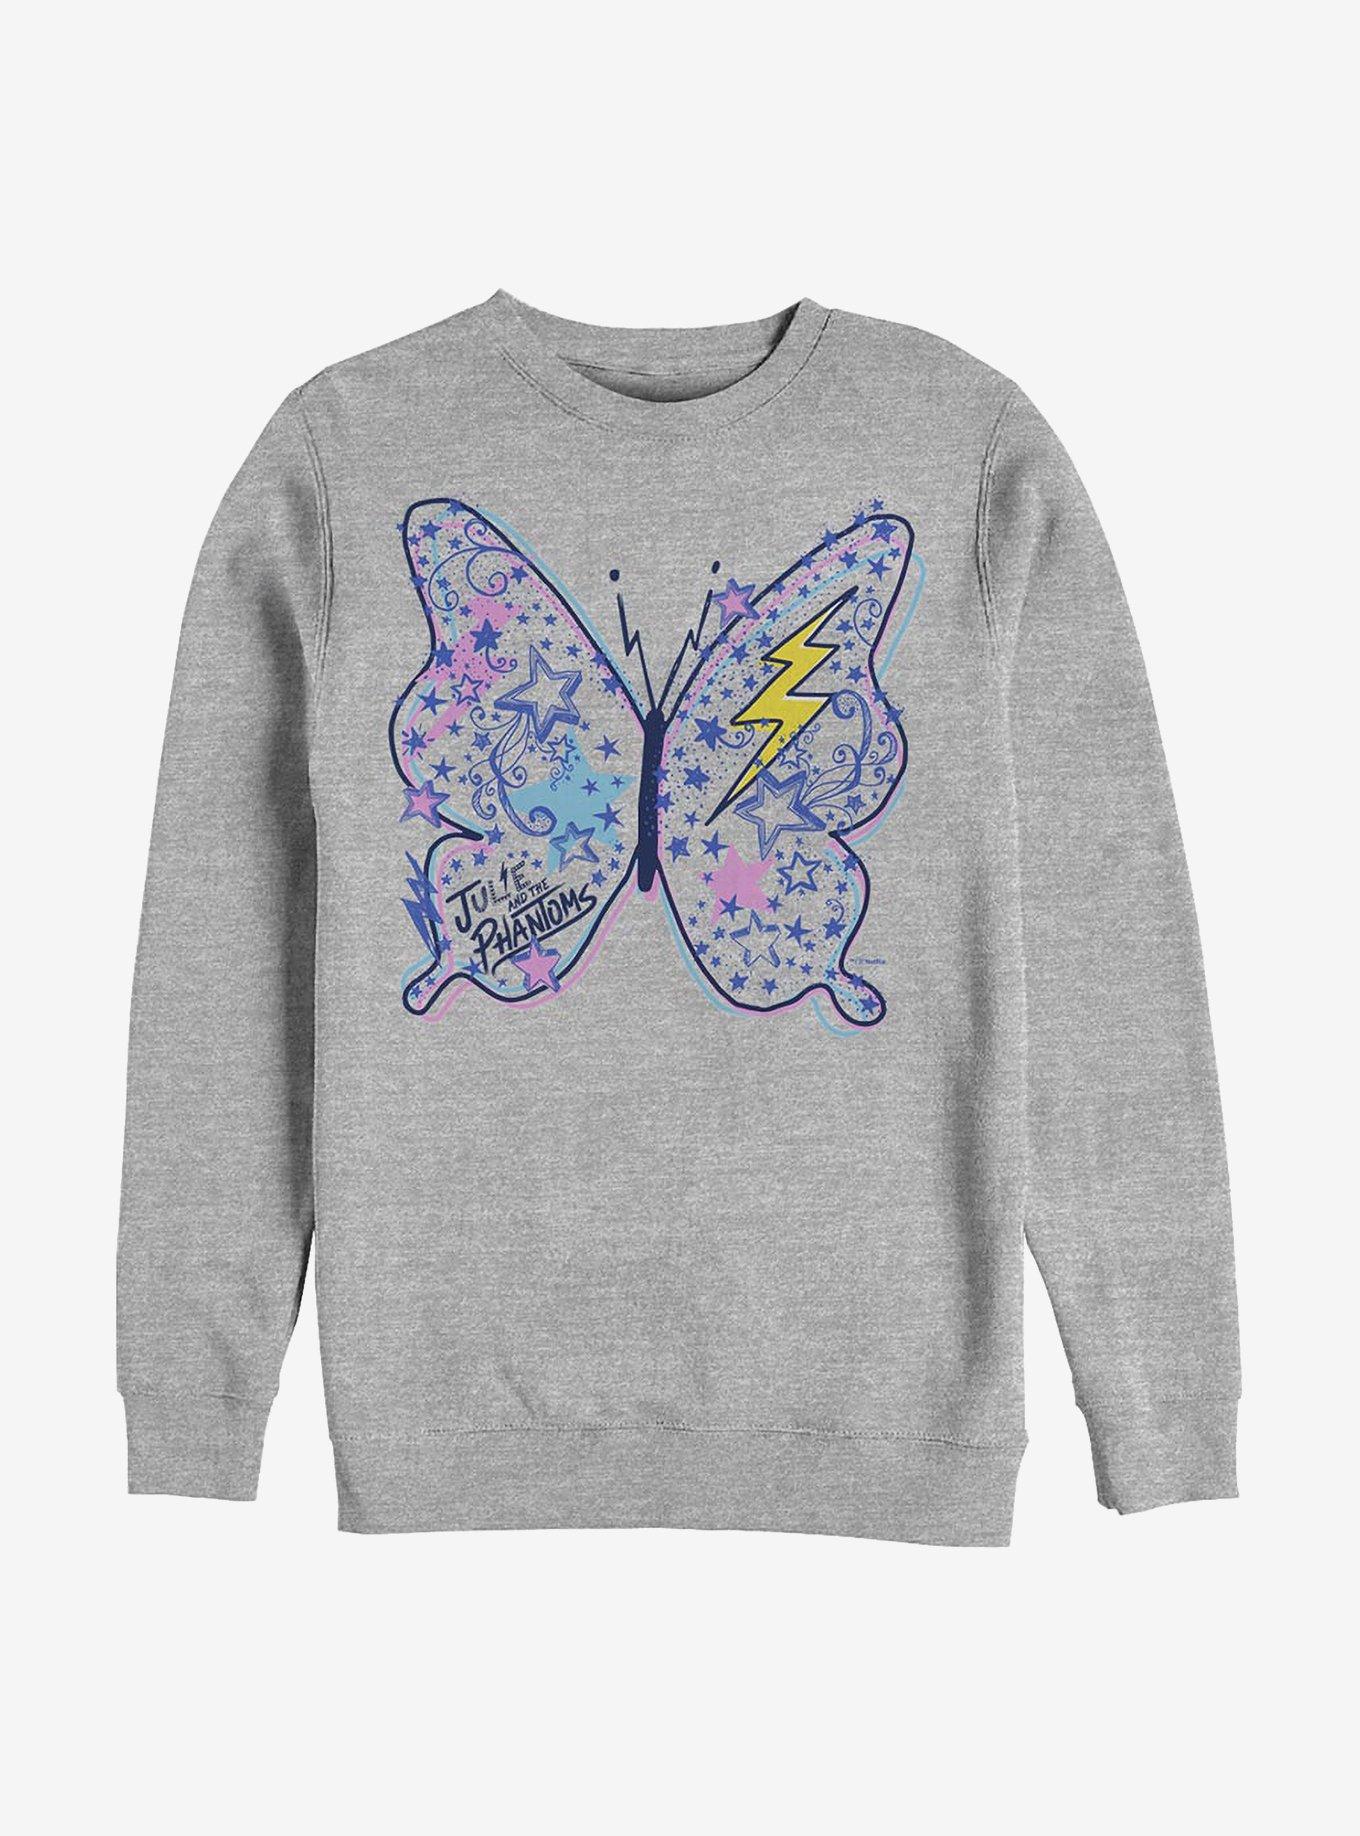 Julie And The Phantoms Butterfly doodles Sweatshirt, , hi-res